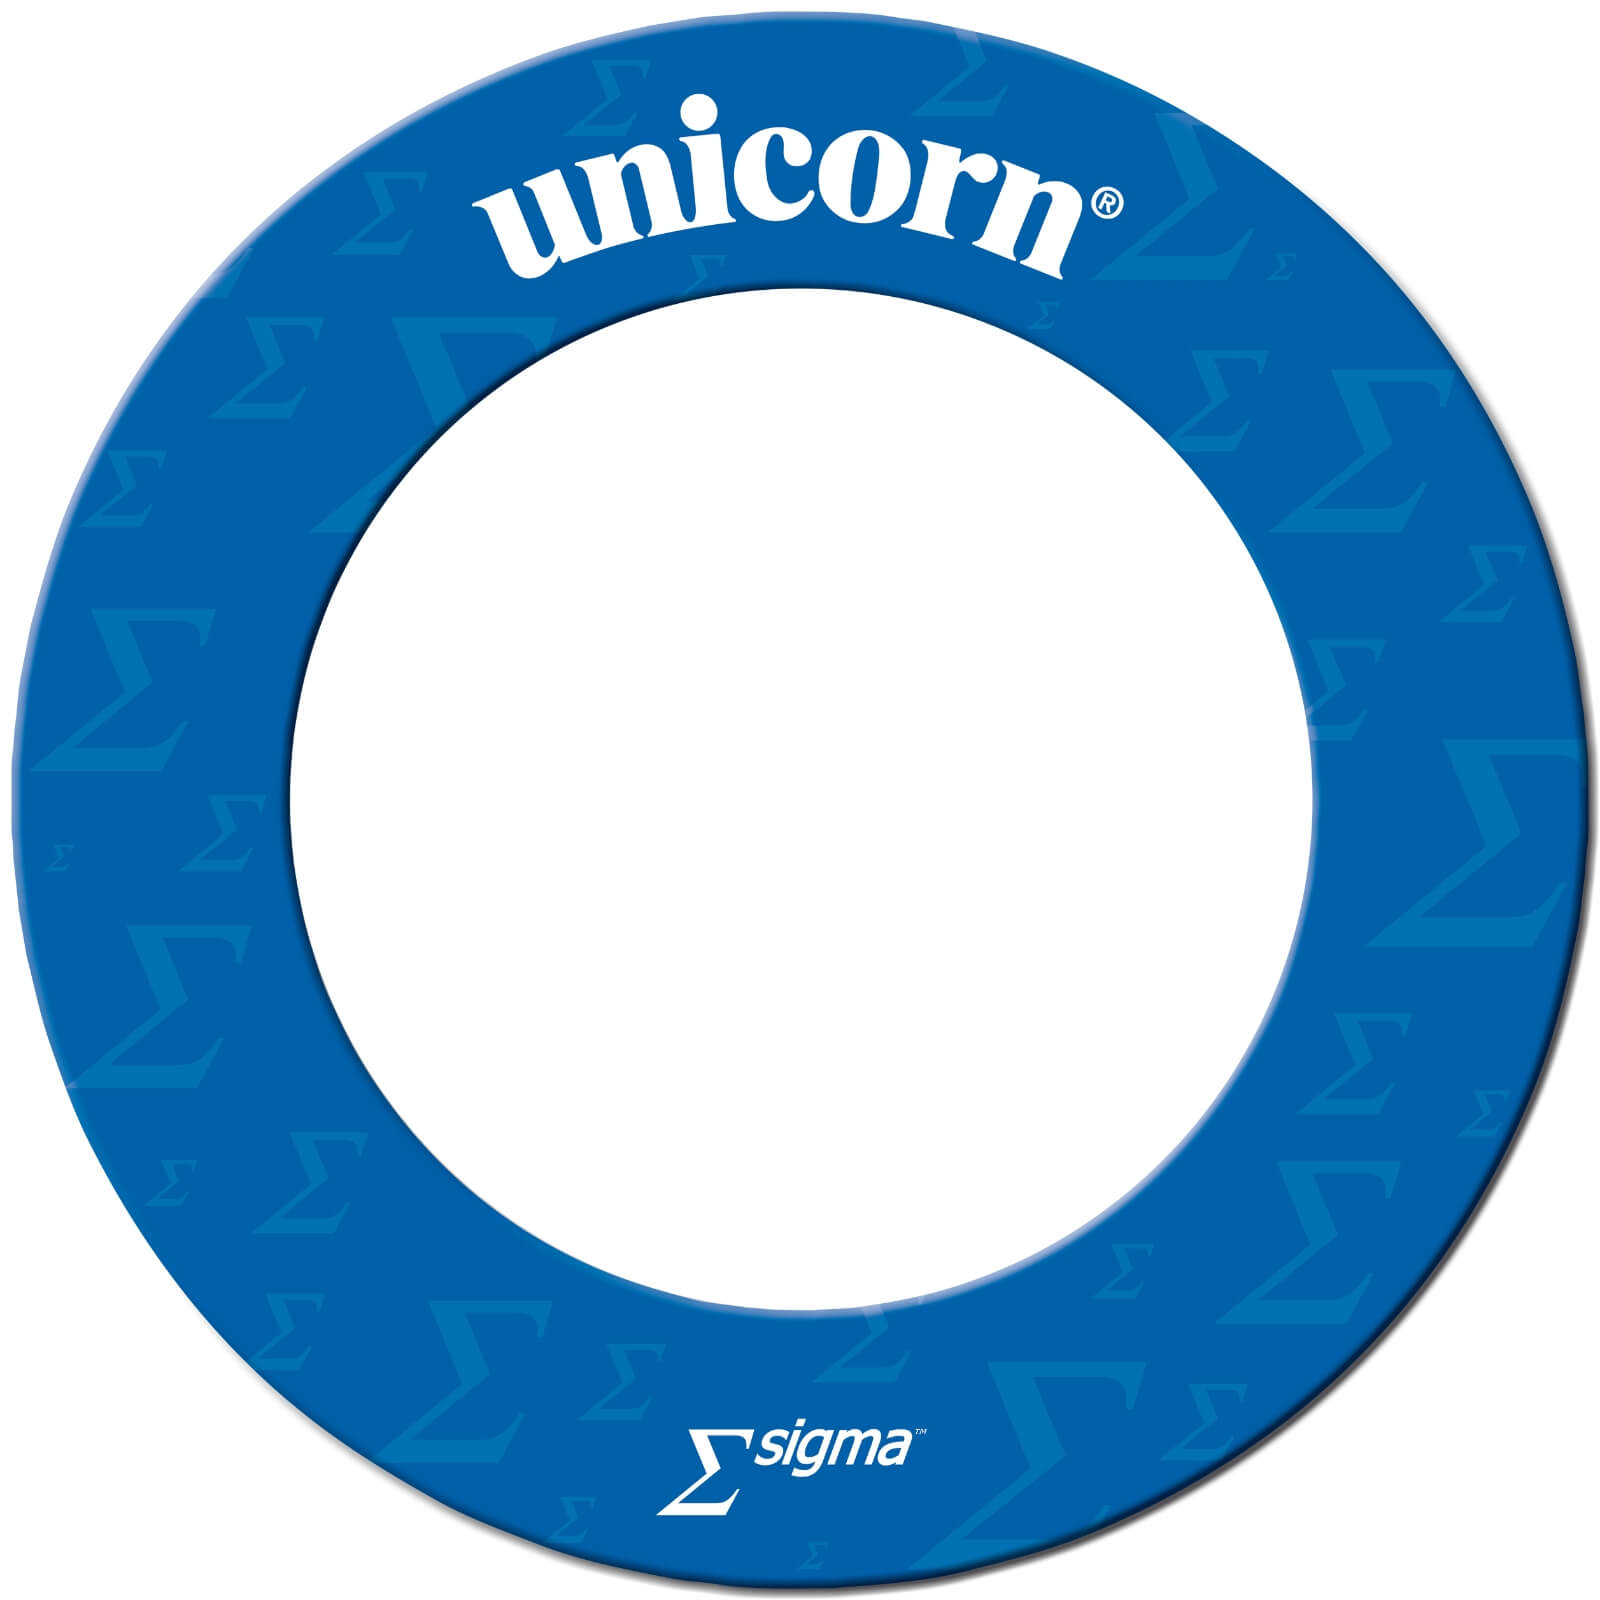 Dartboard Accessories - Unicorn - Professional Dartboard Surround - Sigma 